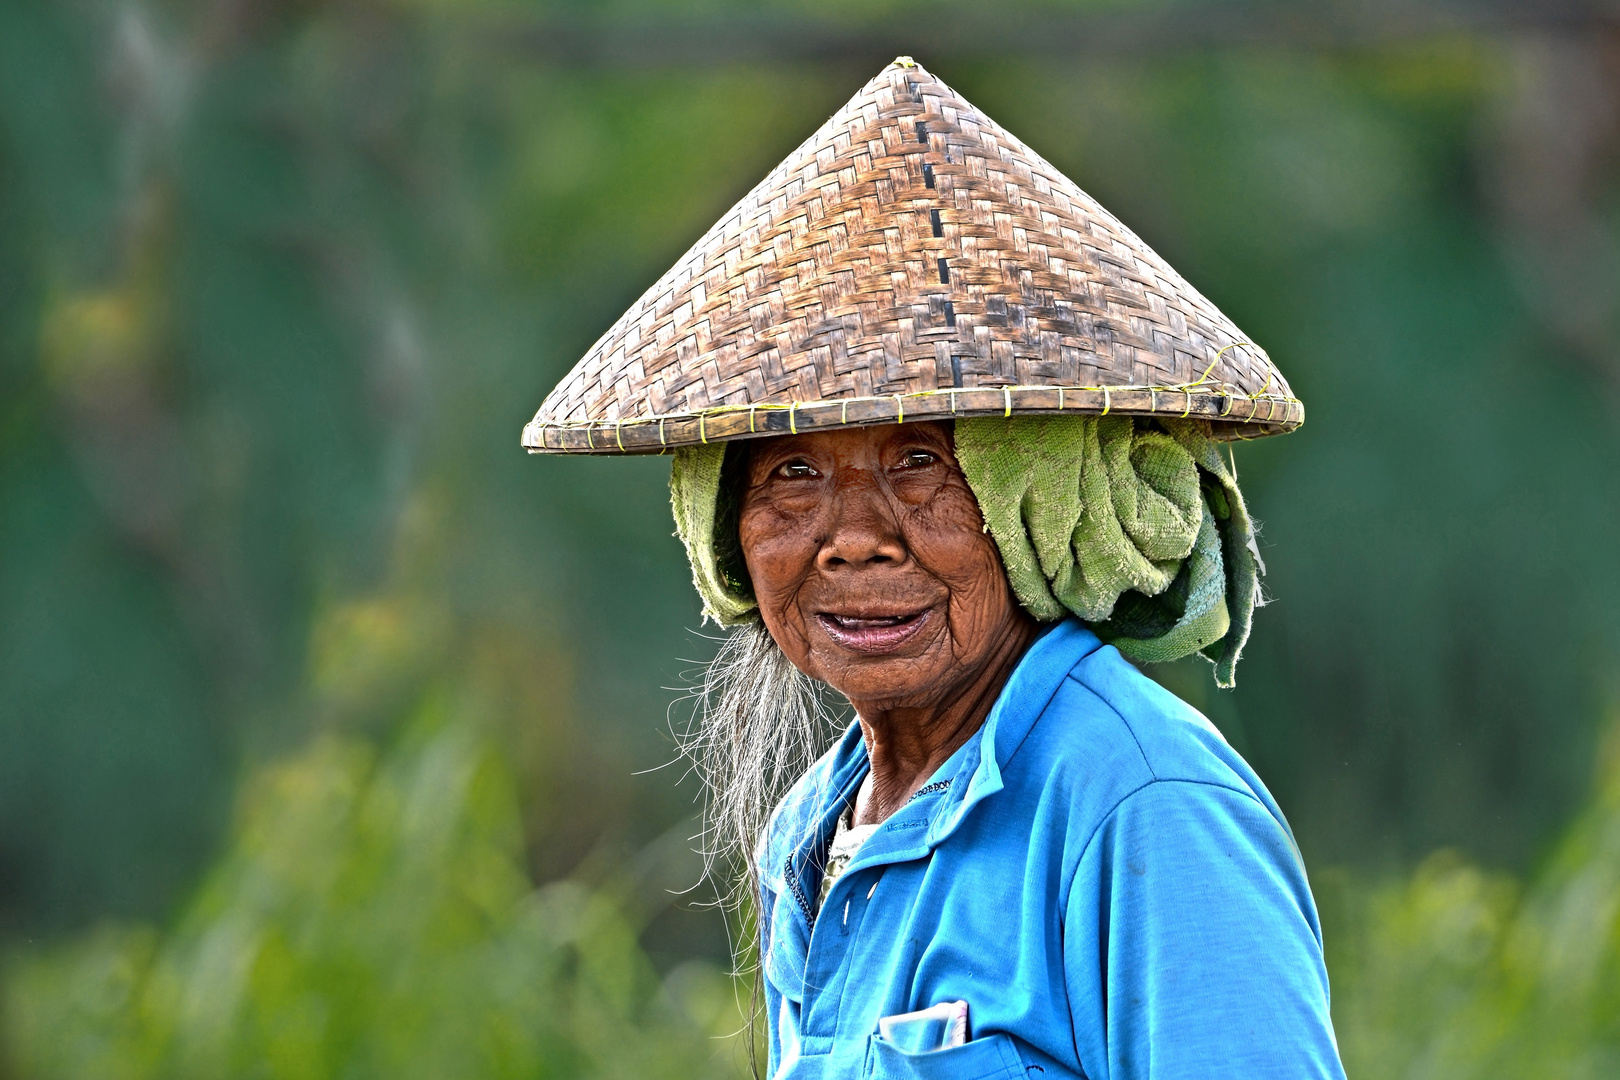 Balinesische Reisarbeiterin